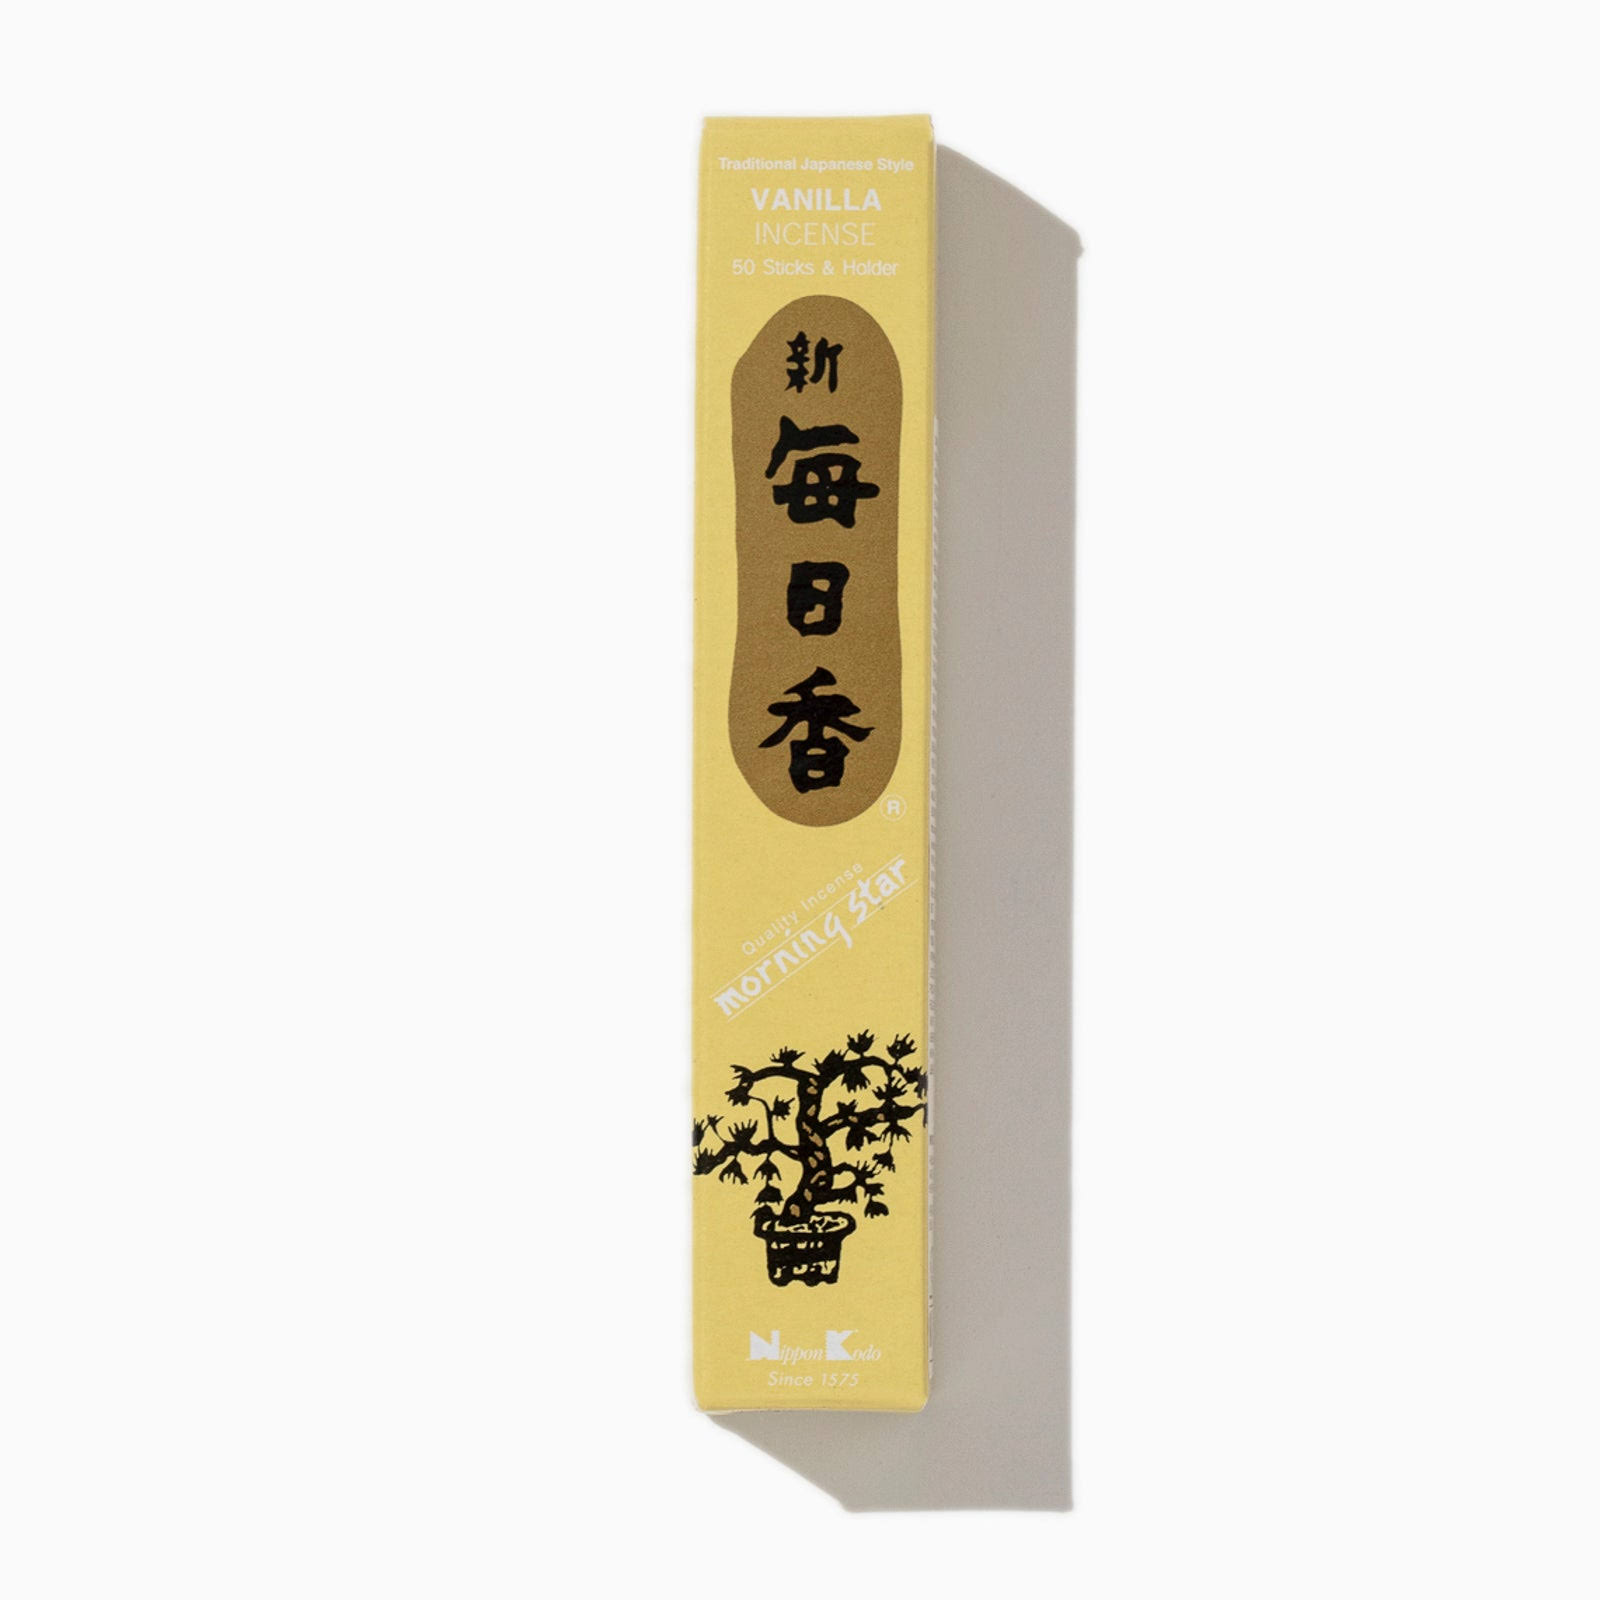 Nippon Kodo Morning Star Incense - 6 Boxes X 50 Sticks